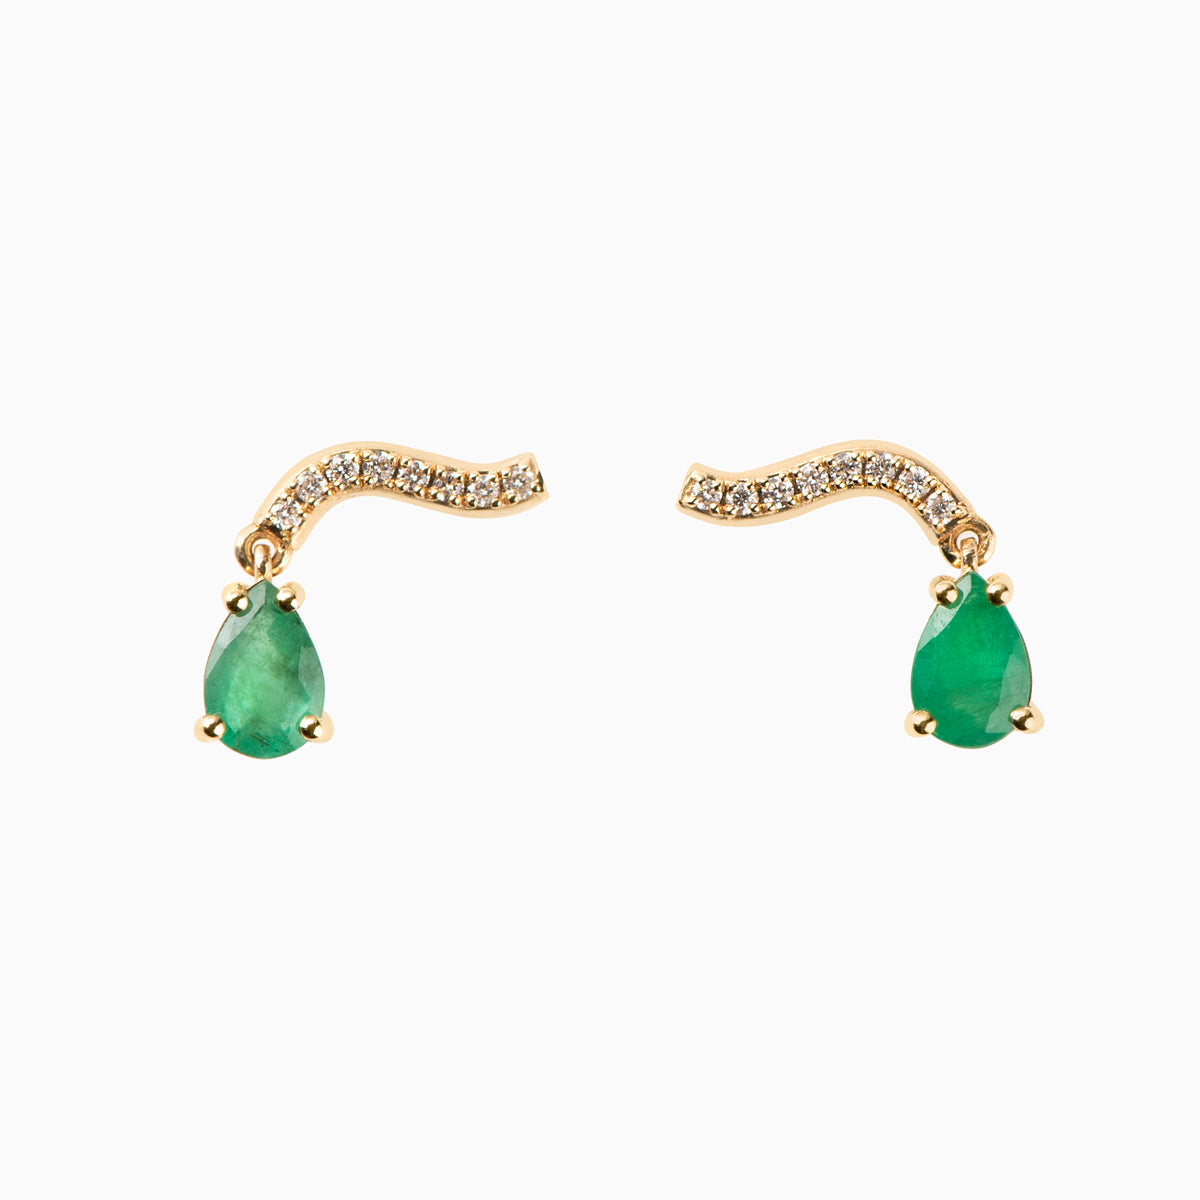 Wave Diamond Earrings with Emerald Drop